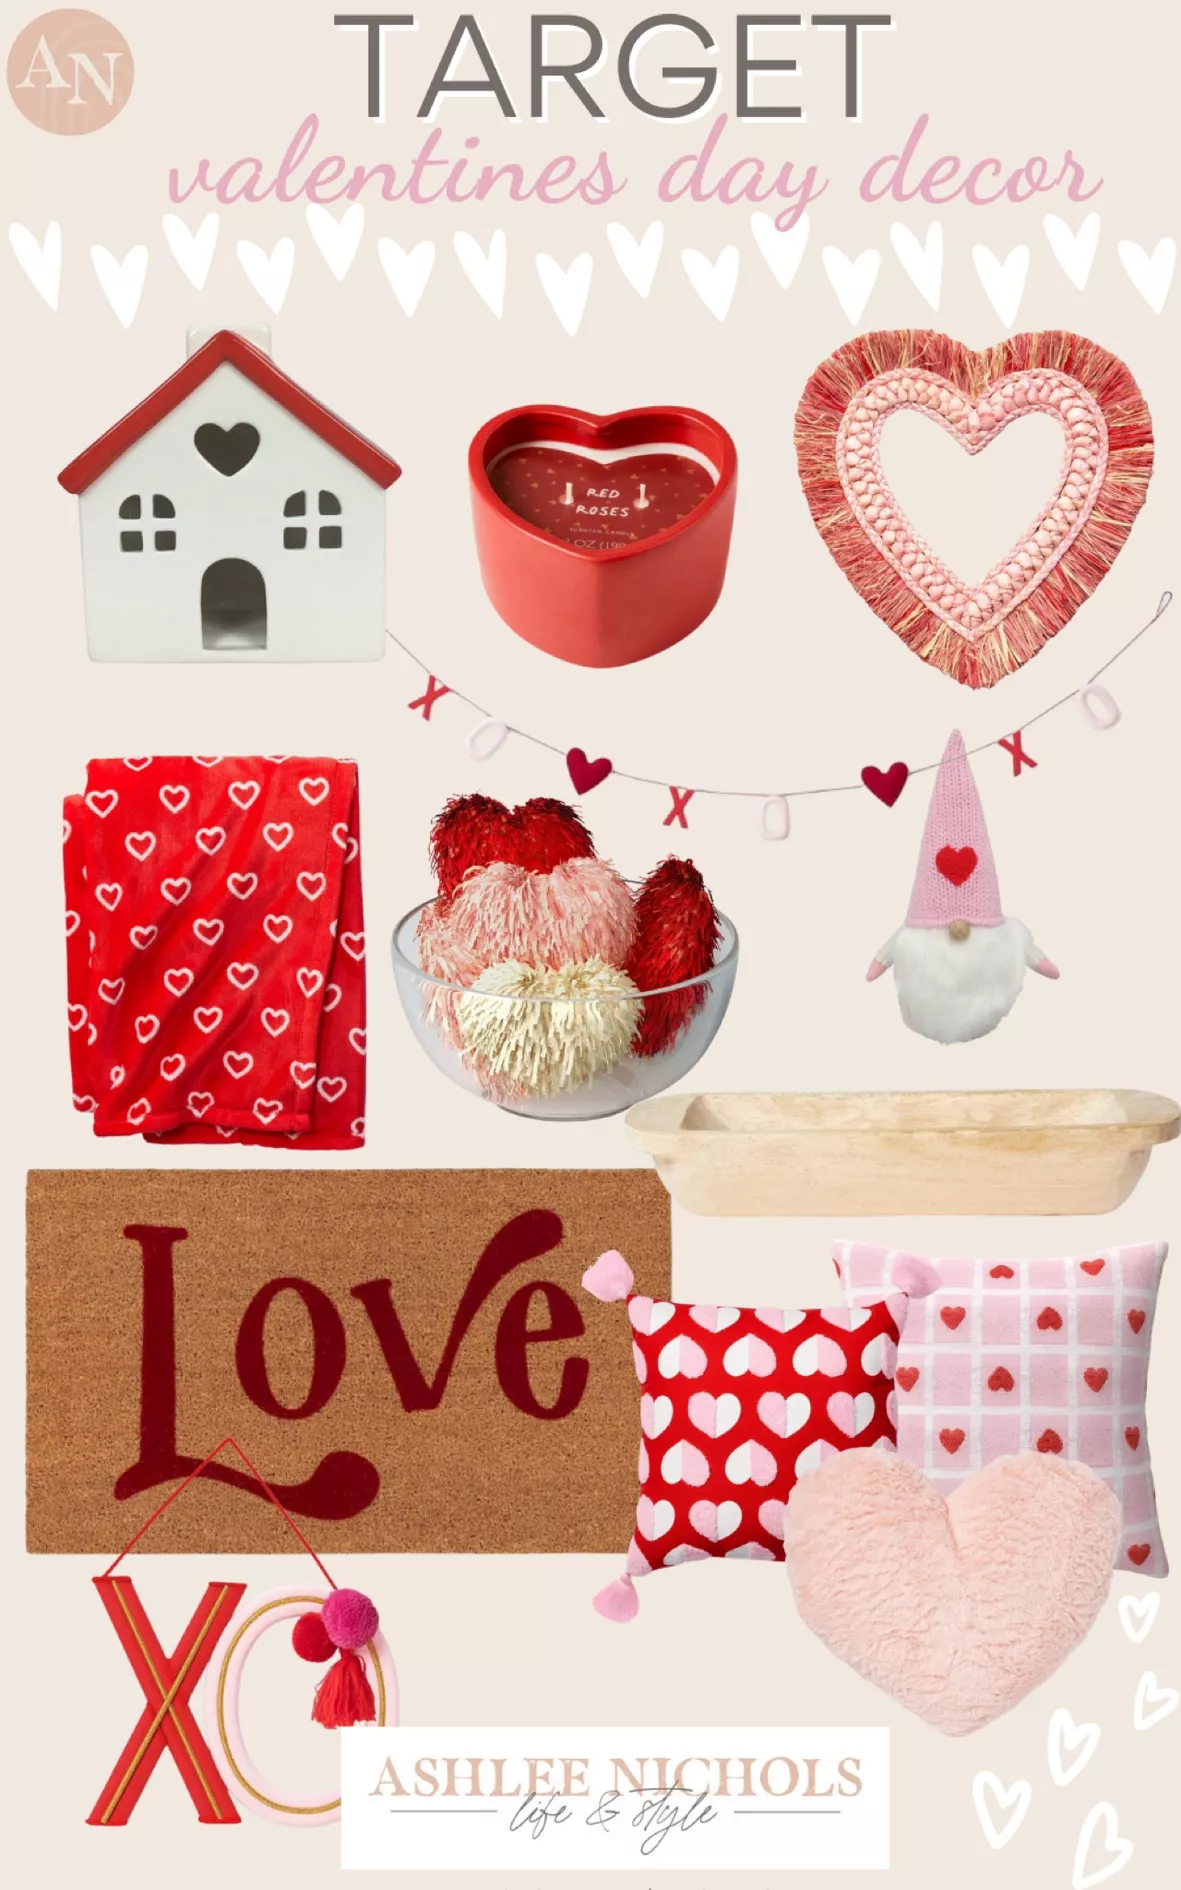 Decorative Filler : Valentine's Day Decorations : Target